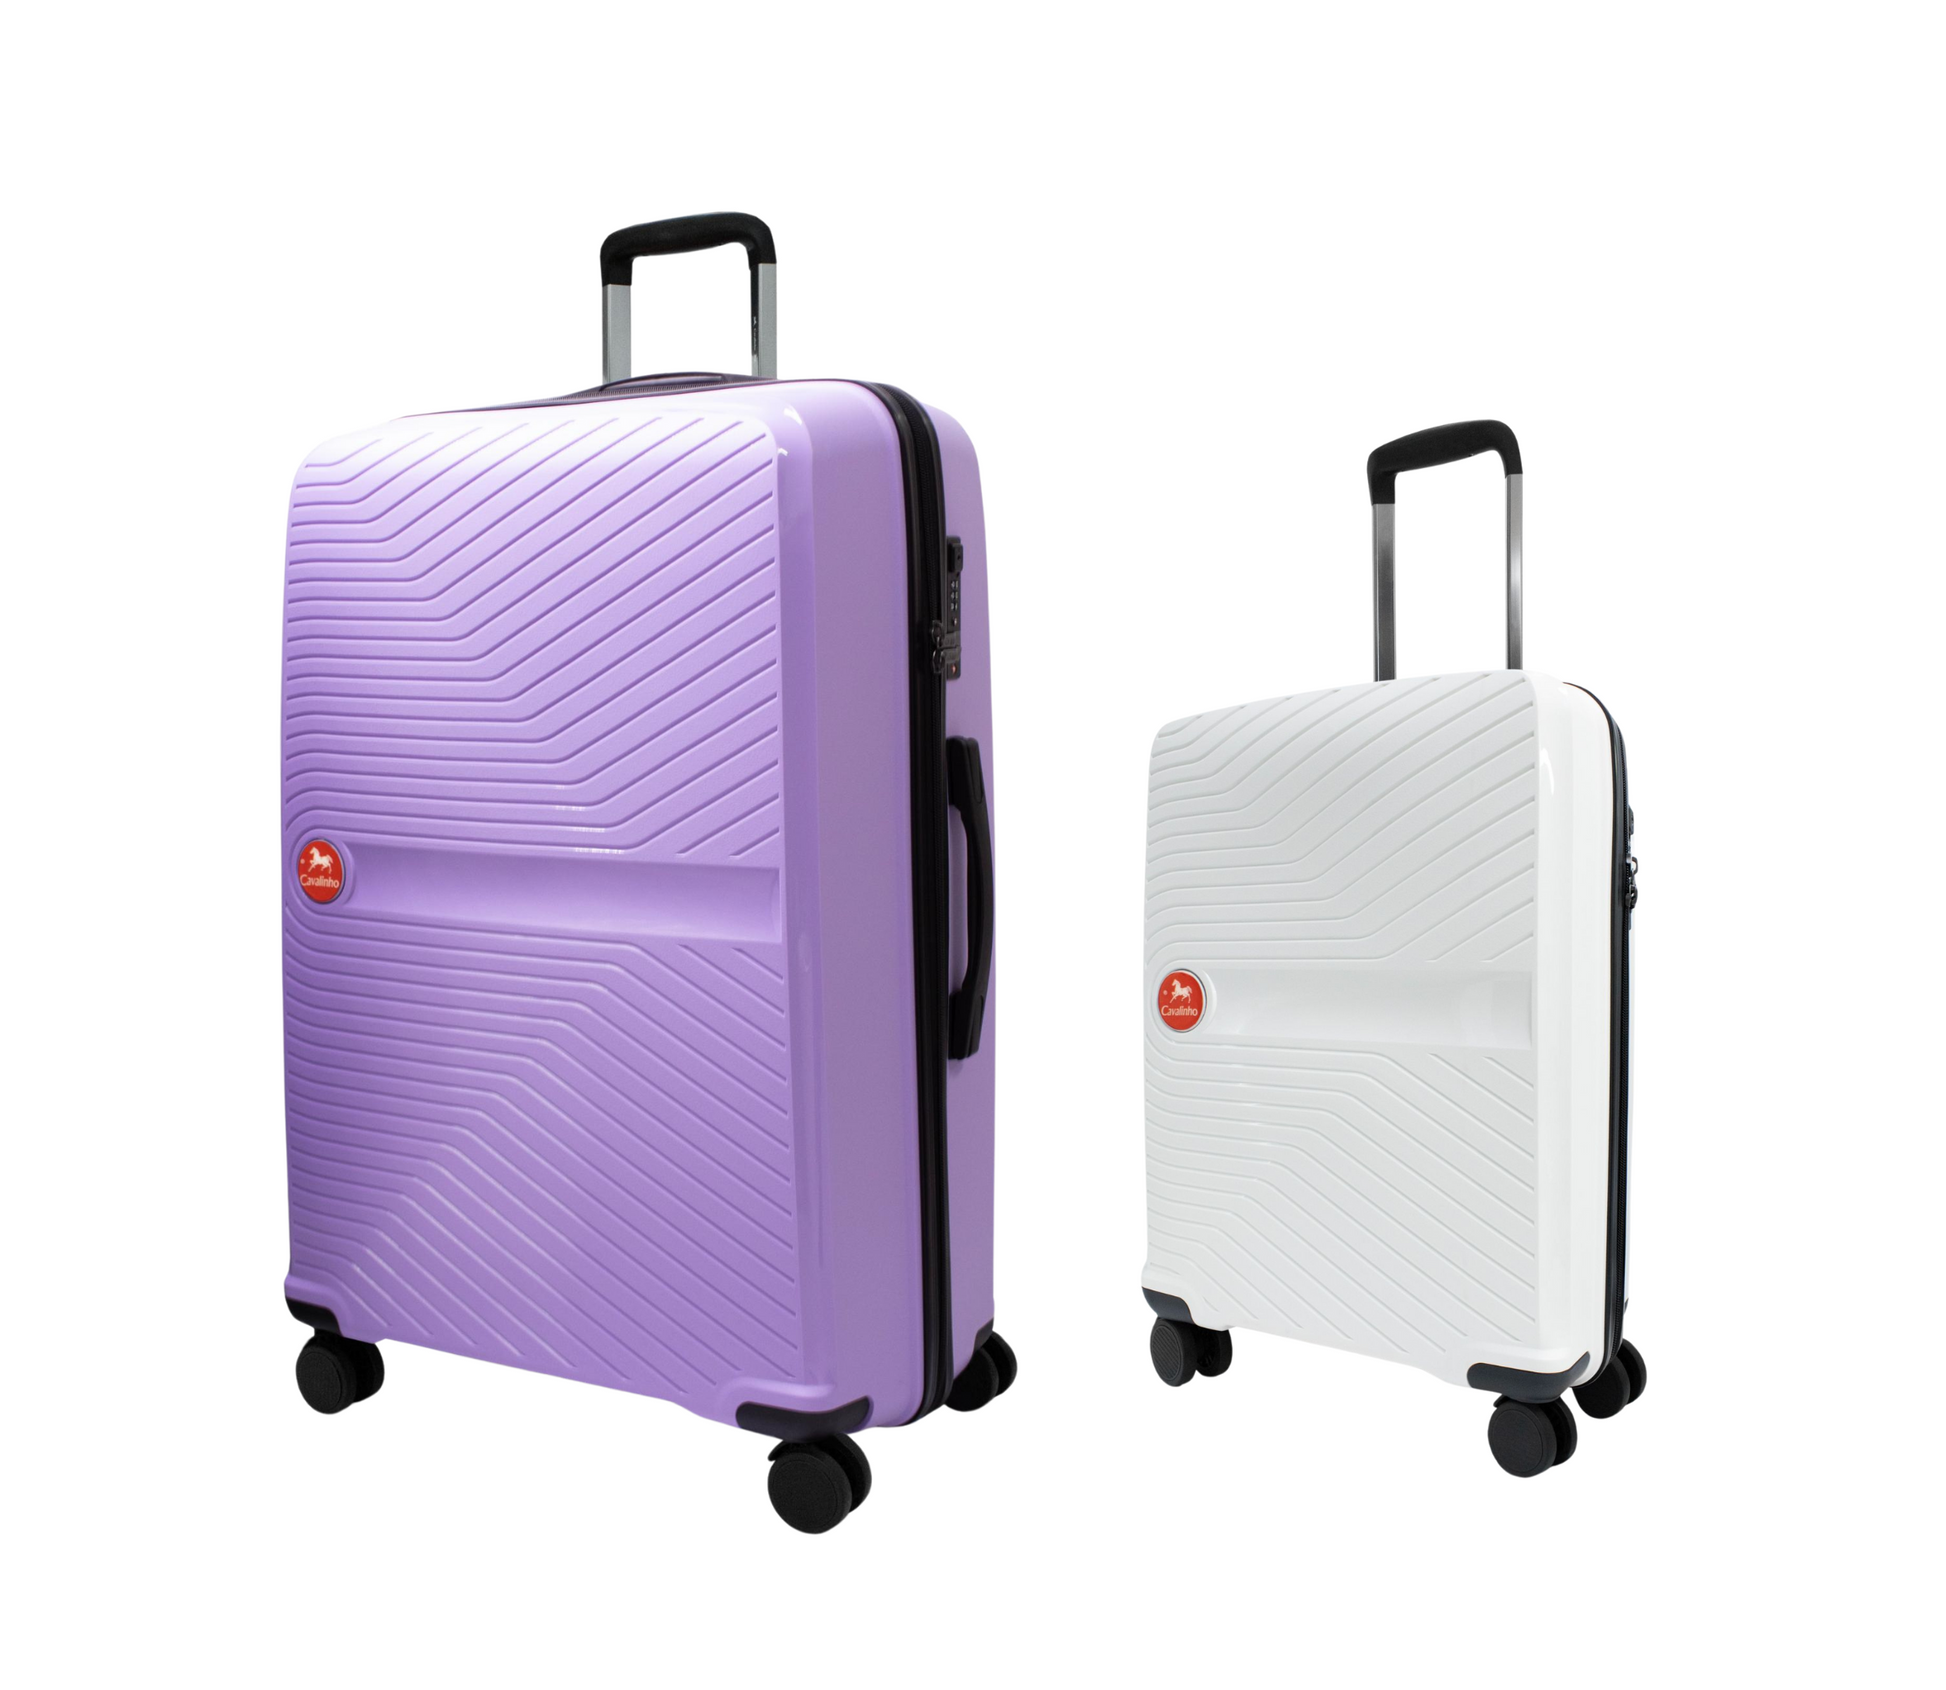 Cavalinho Colorful 2 Piece Luggage Set (19" & 28") - White Lilac - 68020004.0639.S1928._2_2